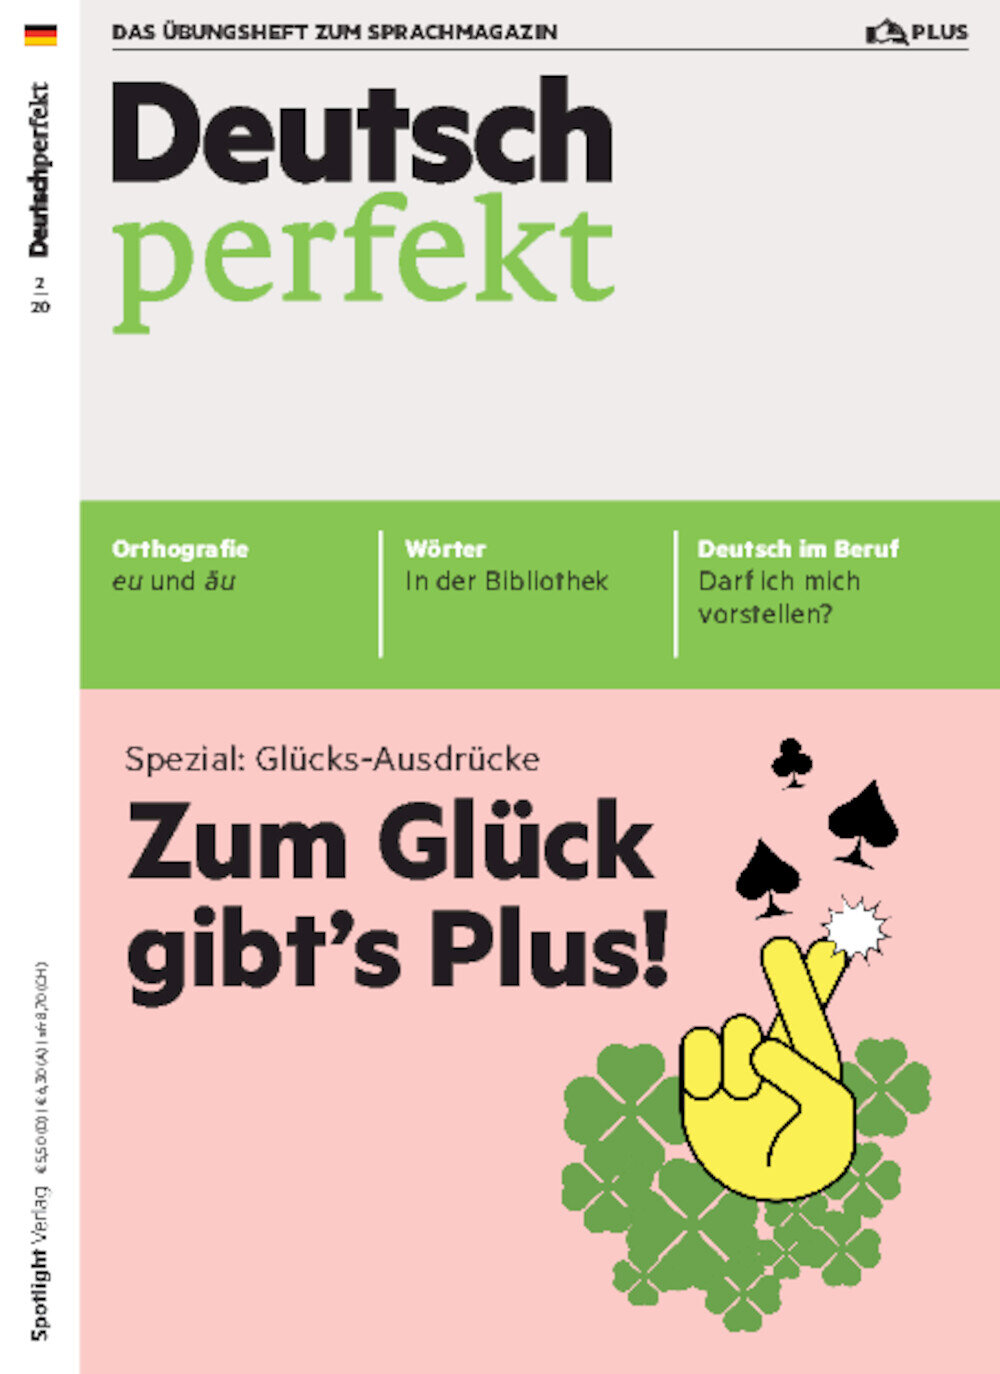 Deutsch perfekt PLUS ePaper 02/2020